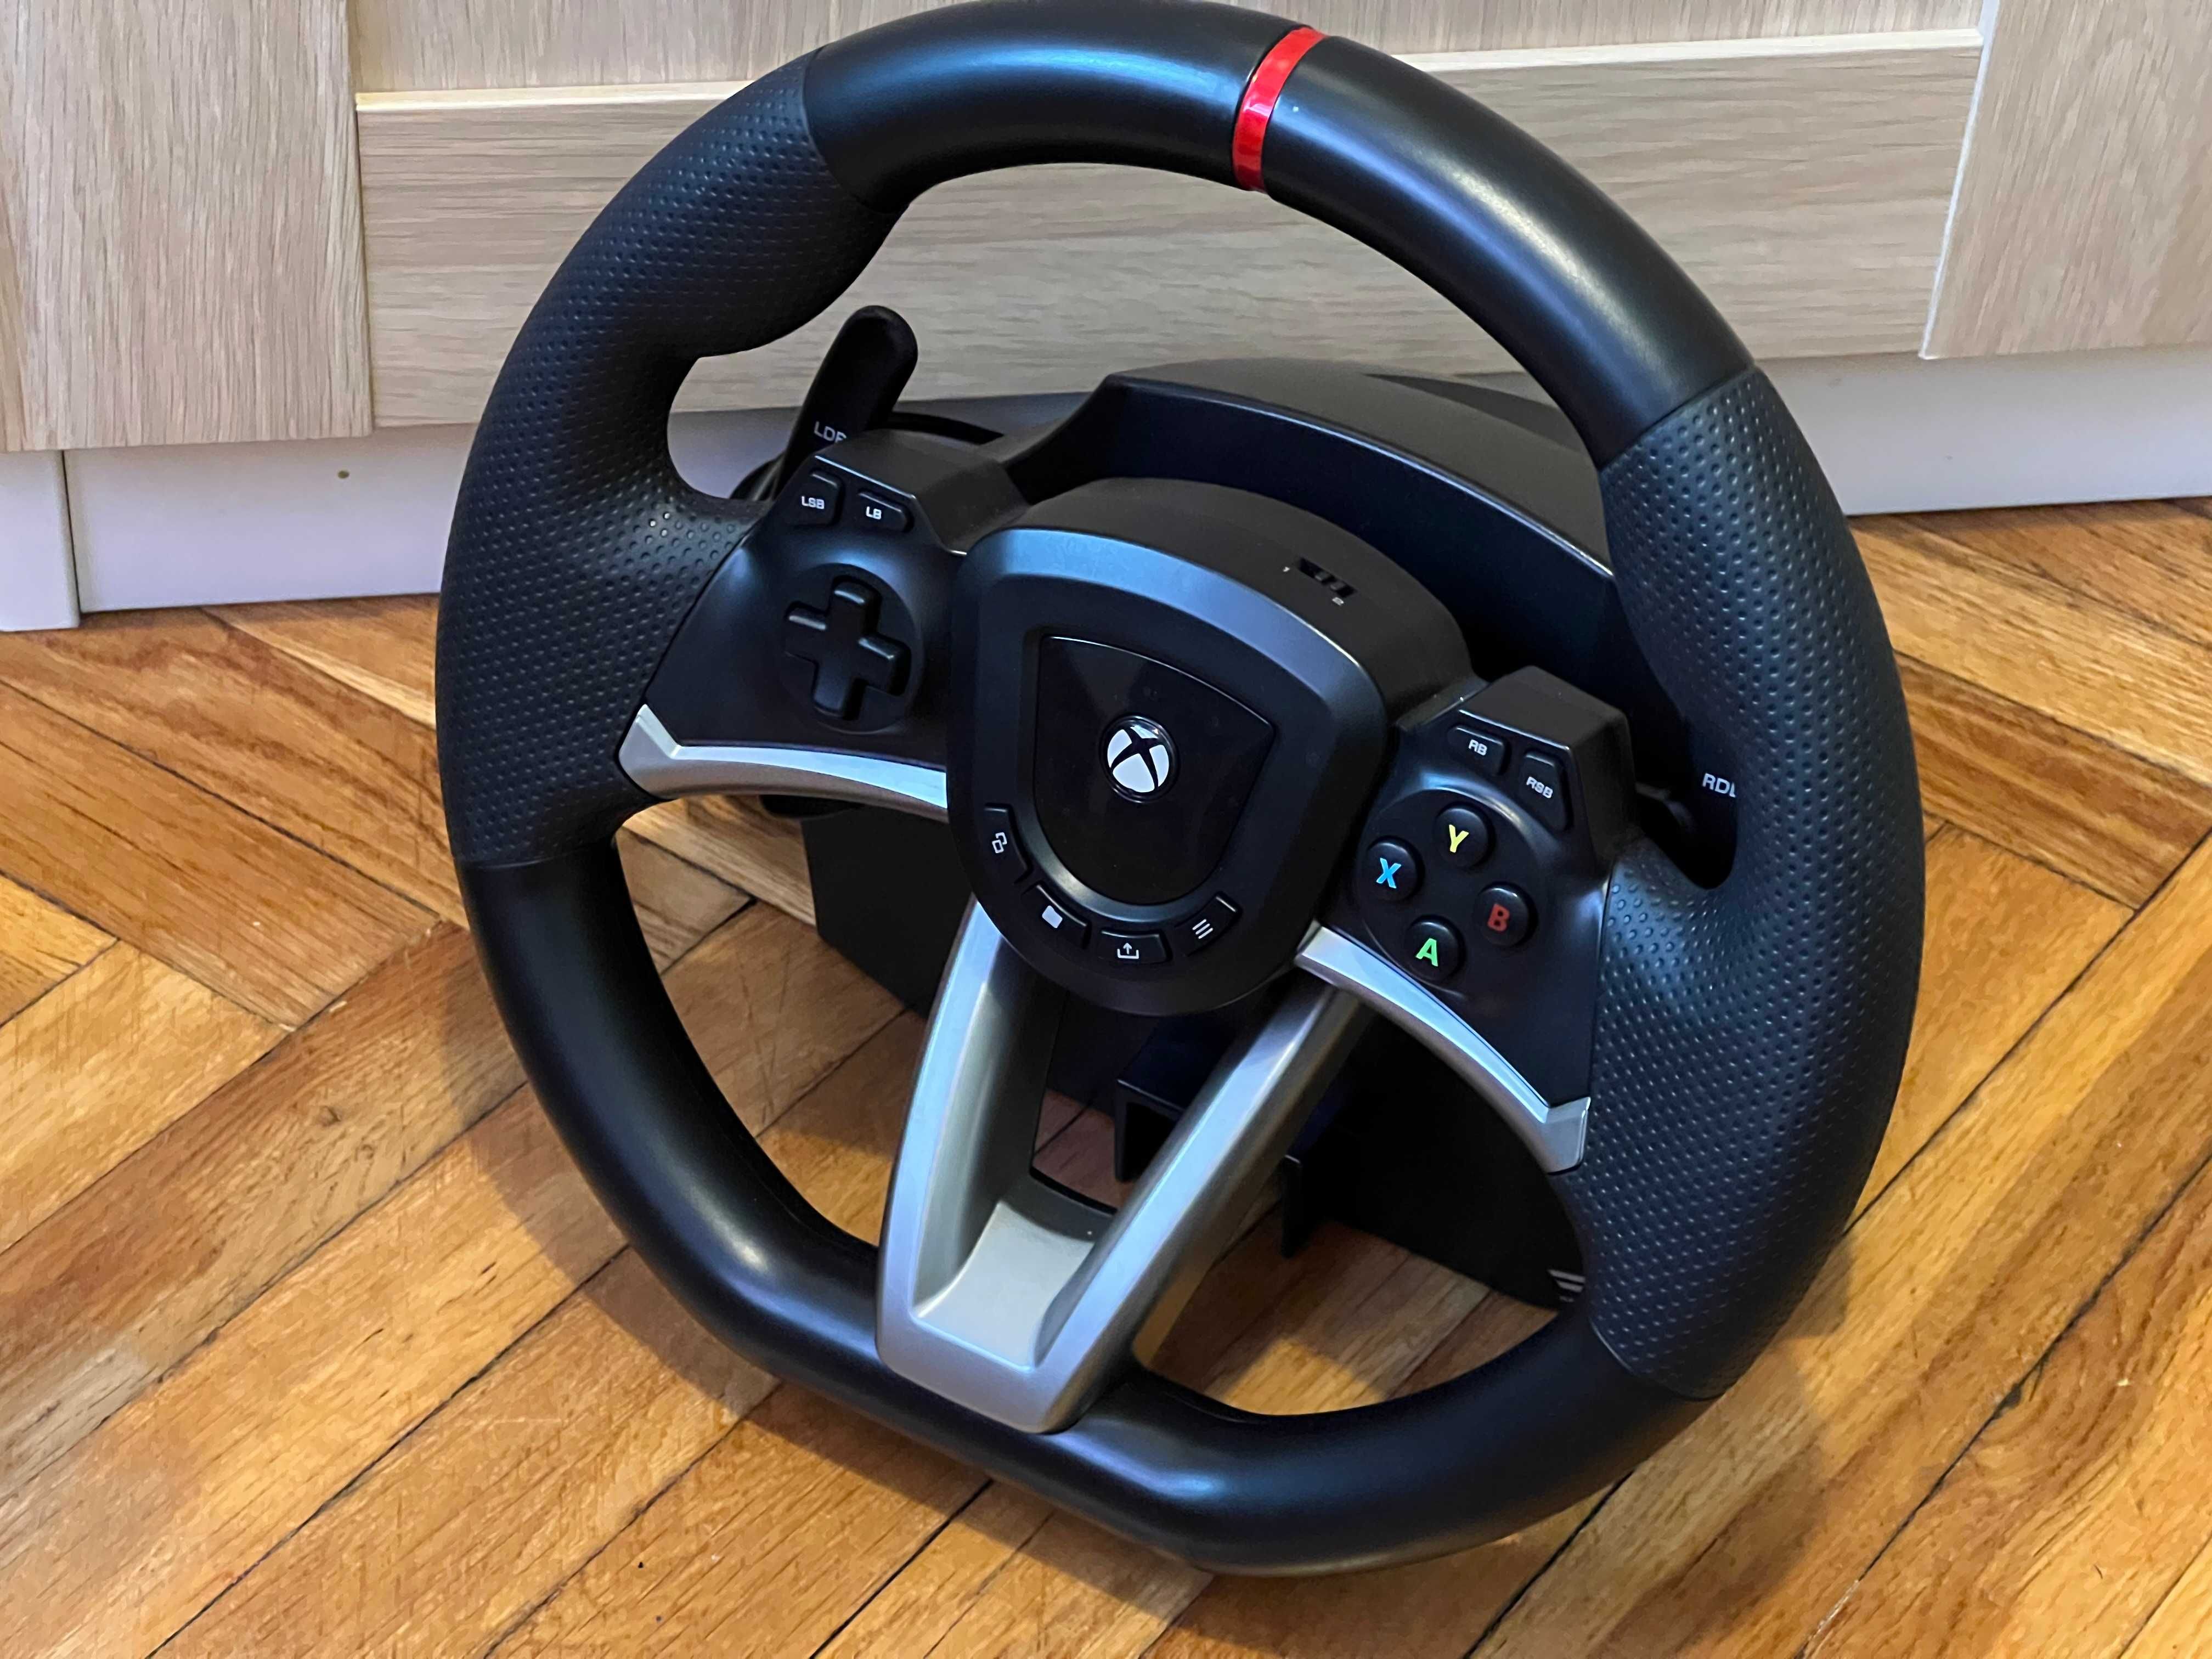 Kierownica HORI Racing Wheel Overdrive (Xbox One, Xbox Series X/S, PC)